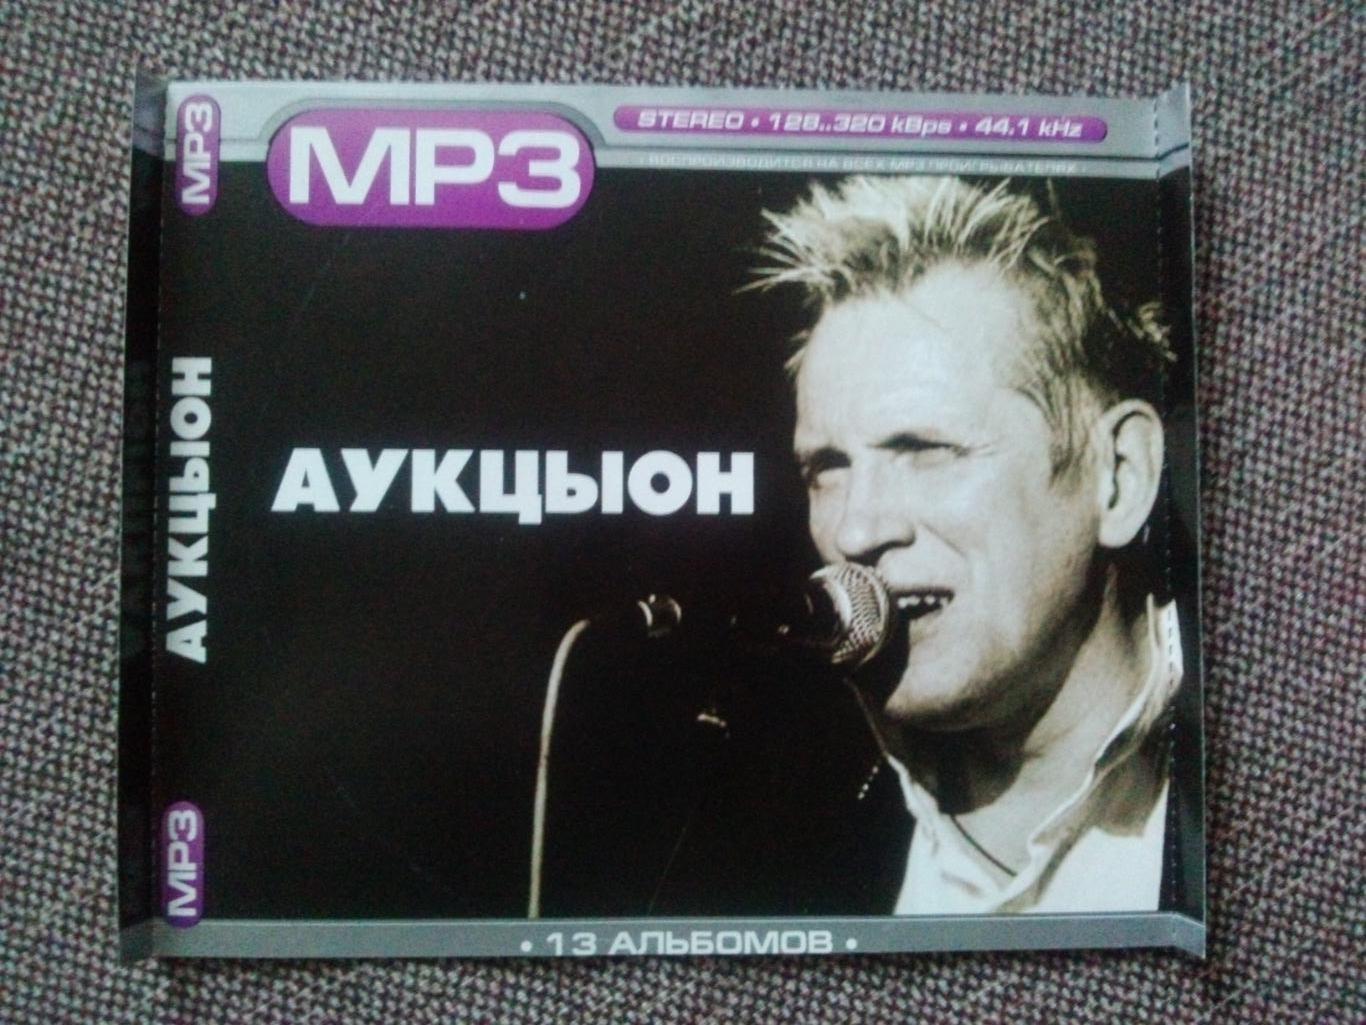 MP - 3 CD диск : группаАукцыон13 альбомов (Русская рок - музыка) 4